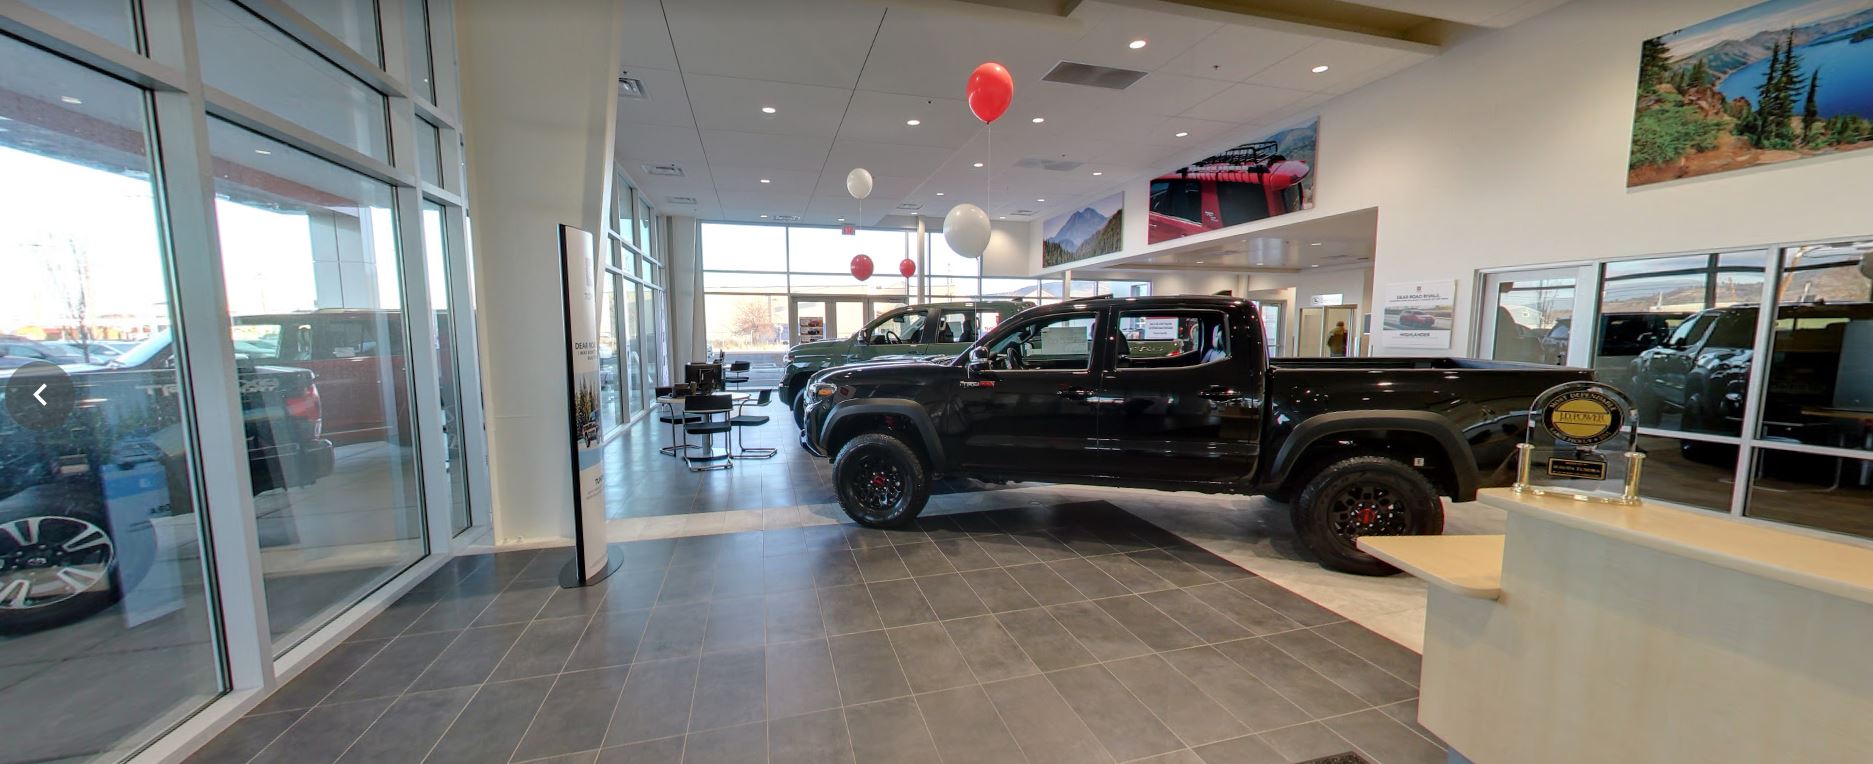 Klamath Falls Toyota show room with a black pick-up truck